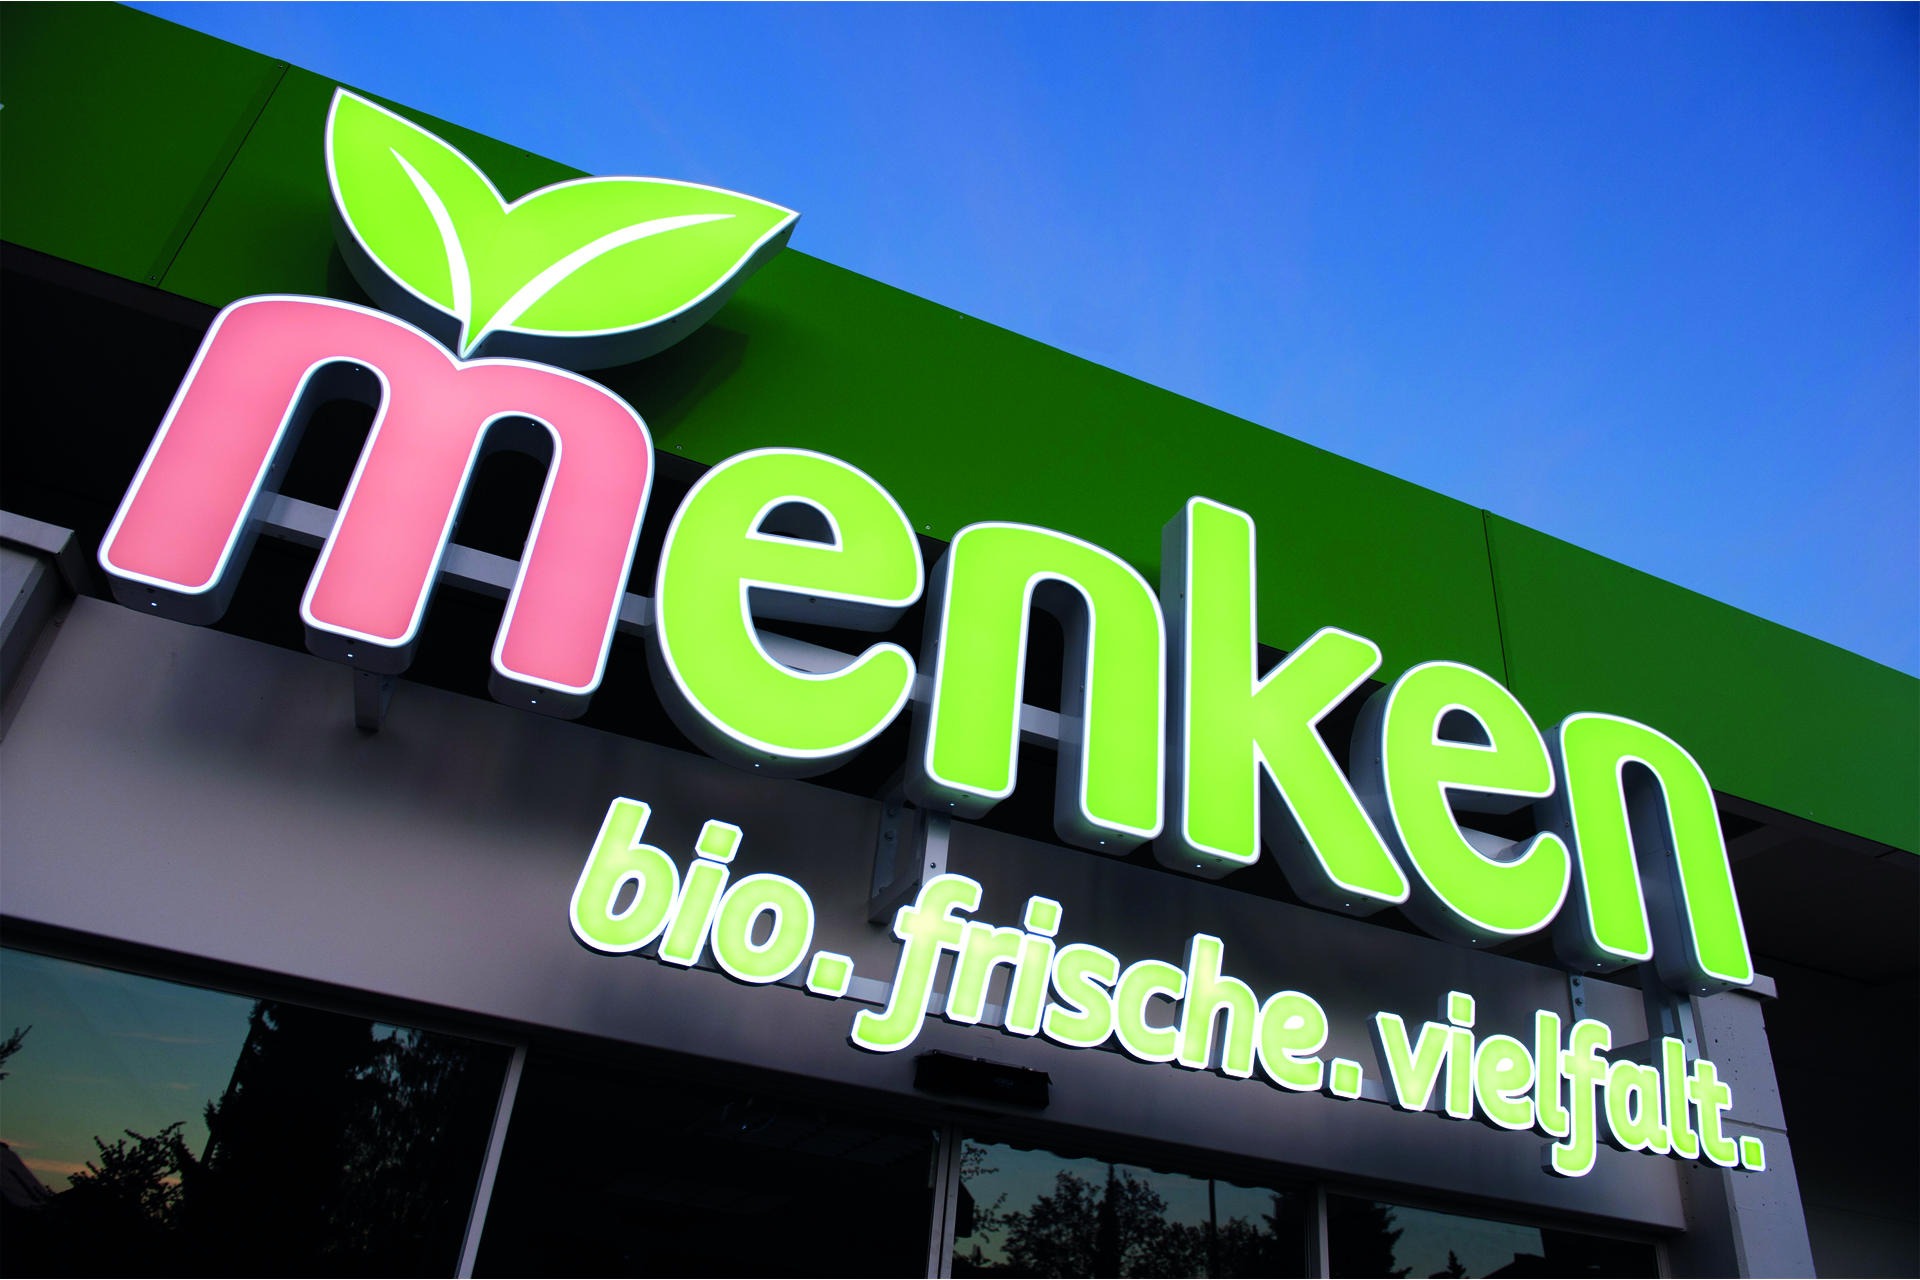 menken GmbH